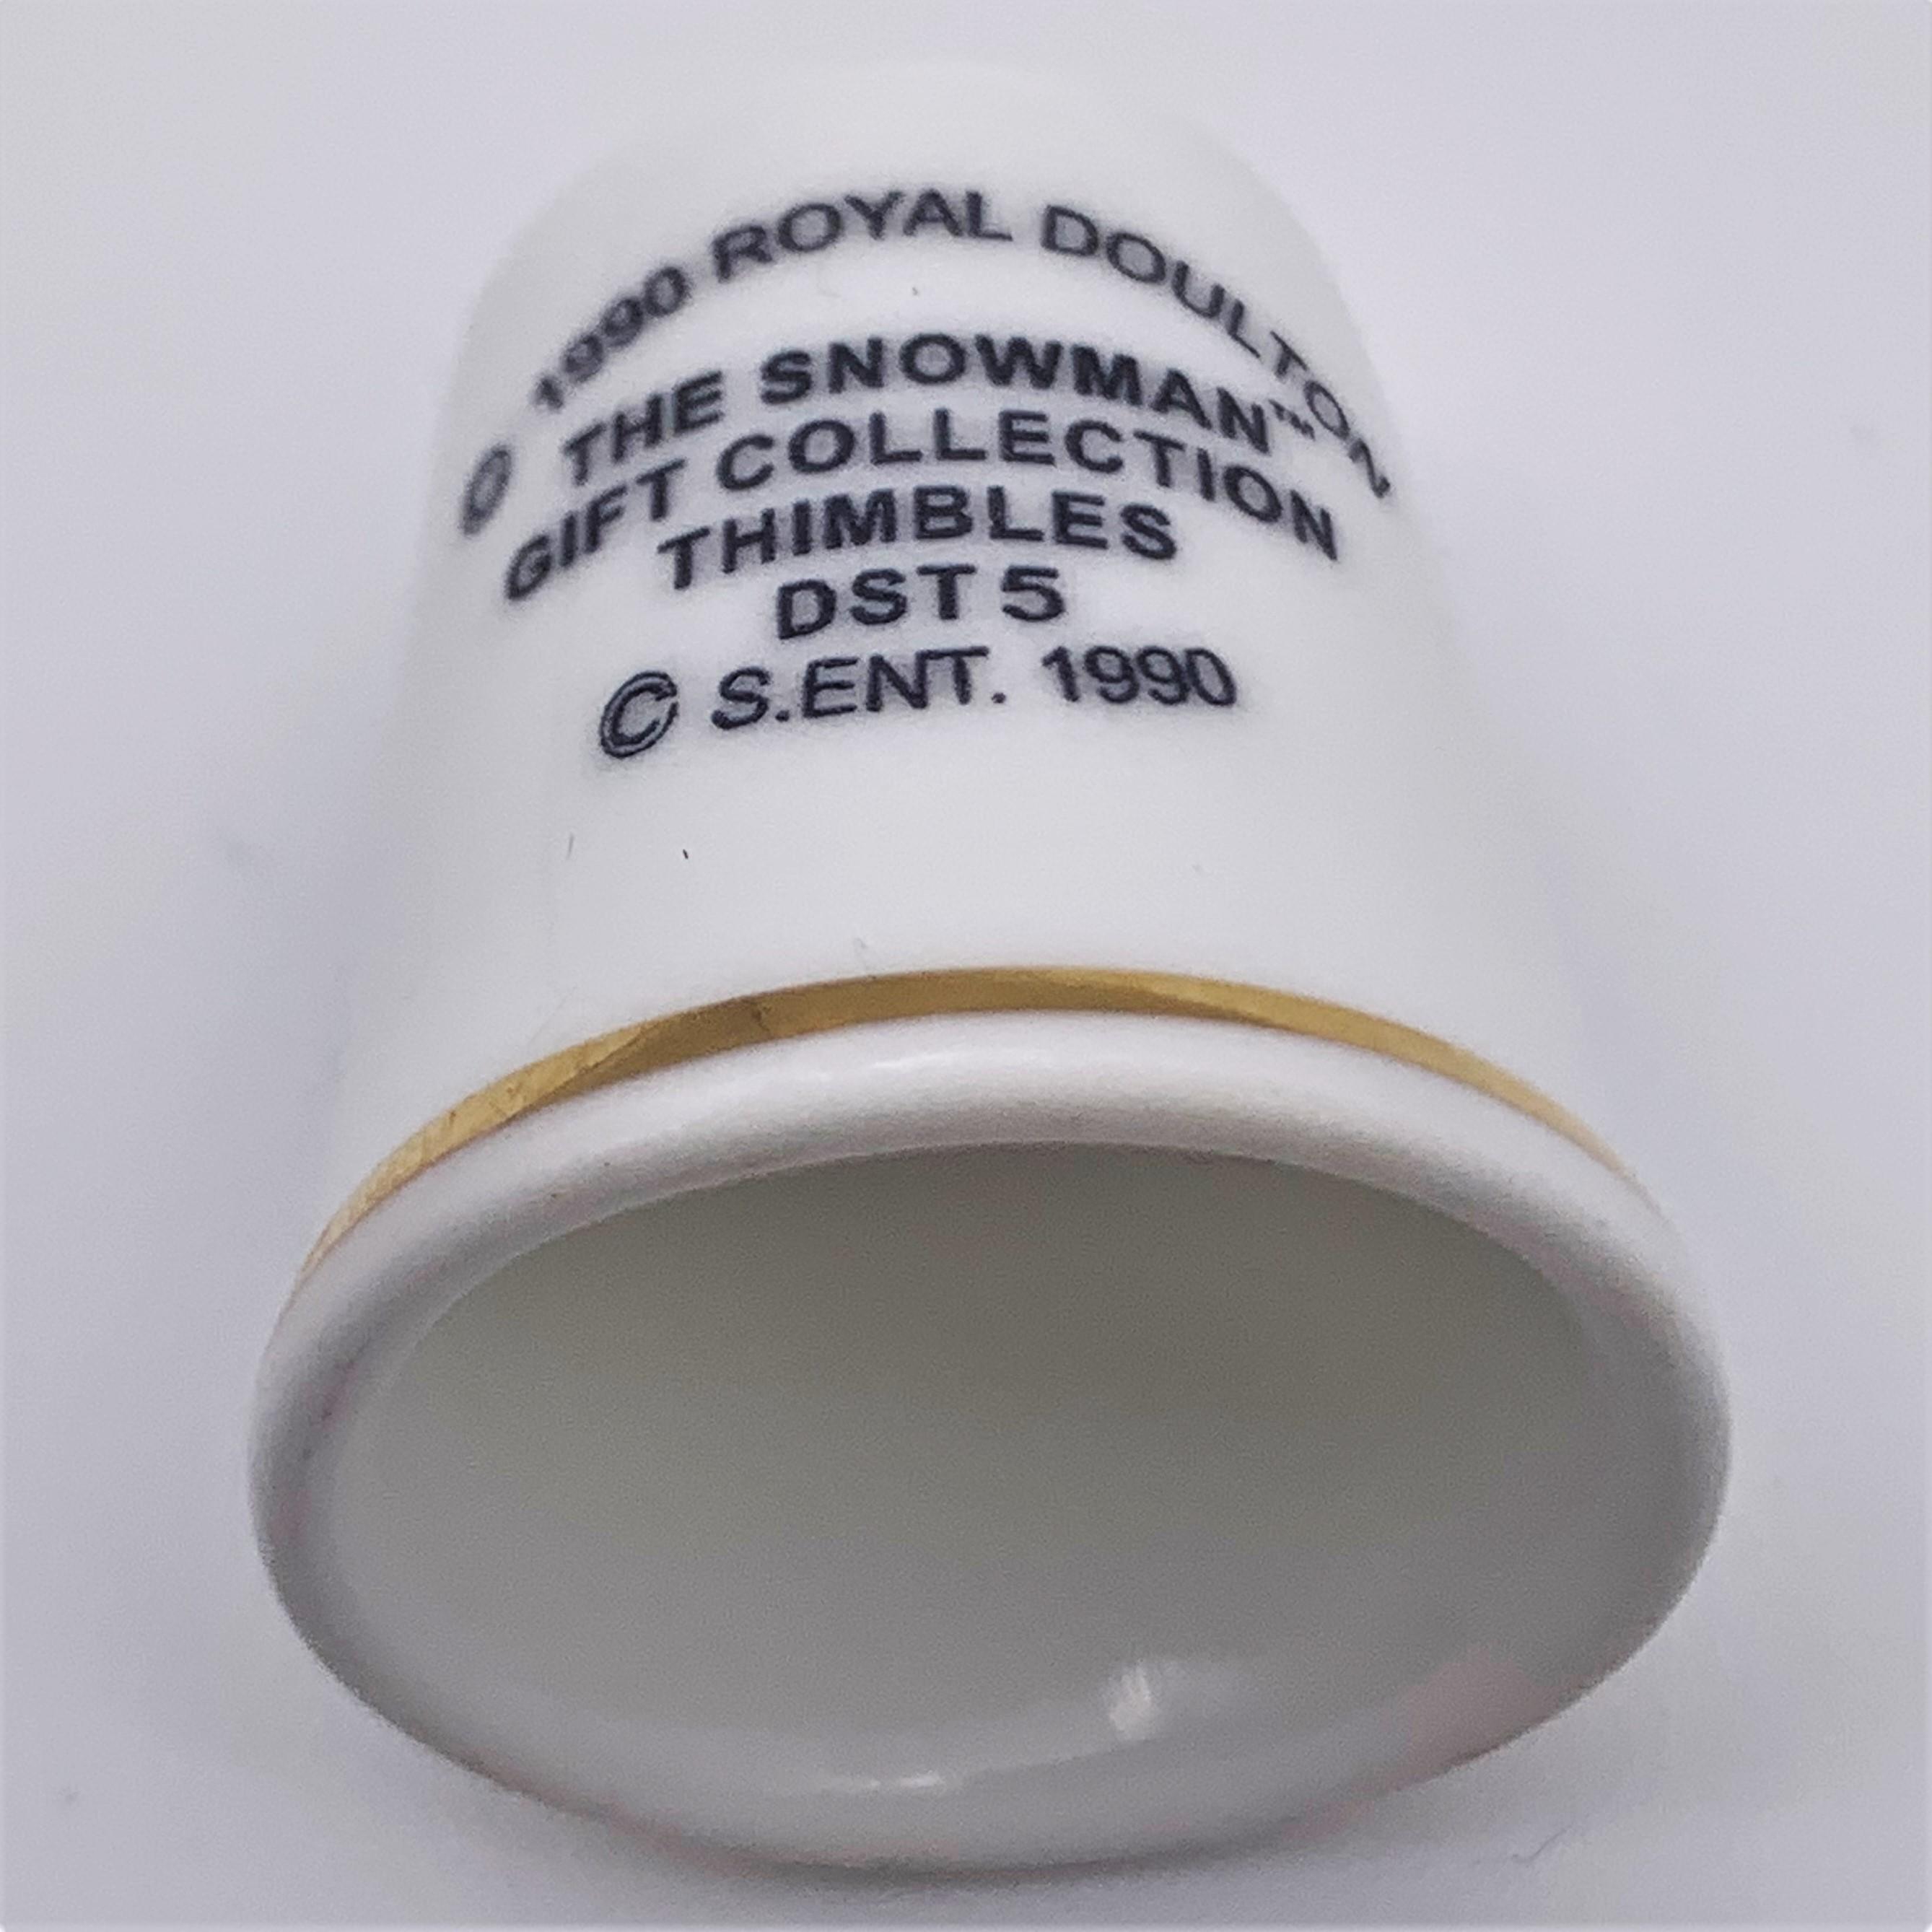 Royal Doulton Prototype Thimble - DST5 Highland Snowman - inside